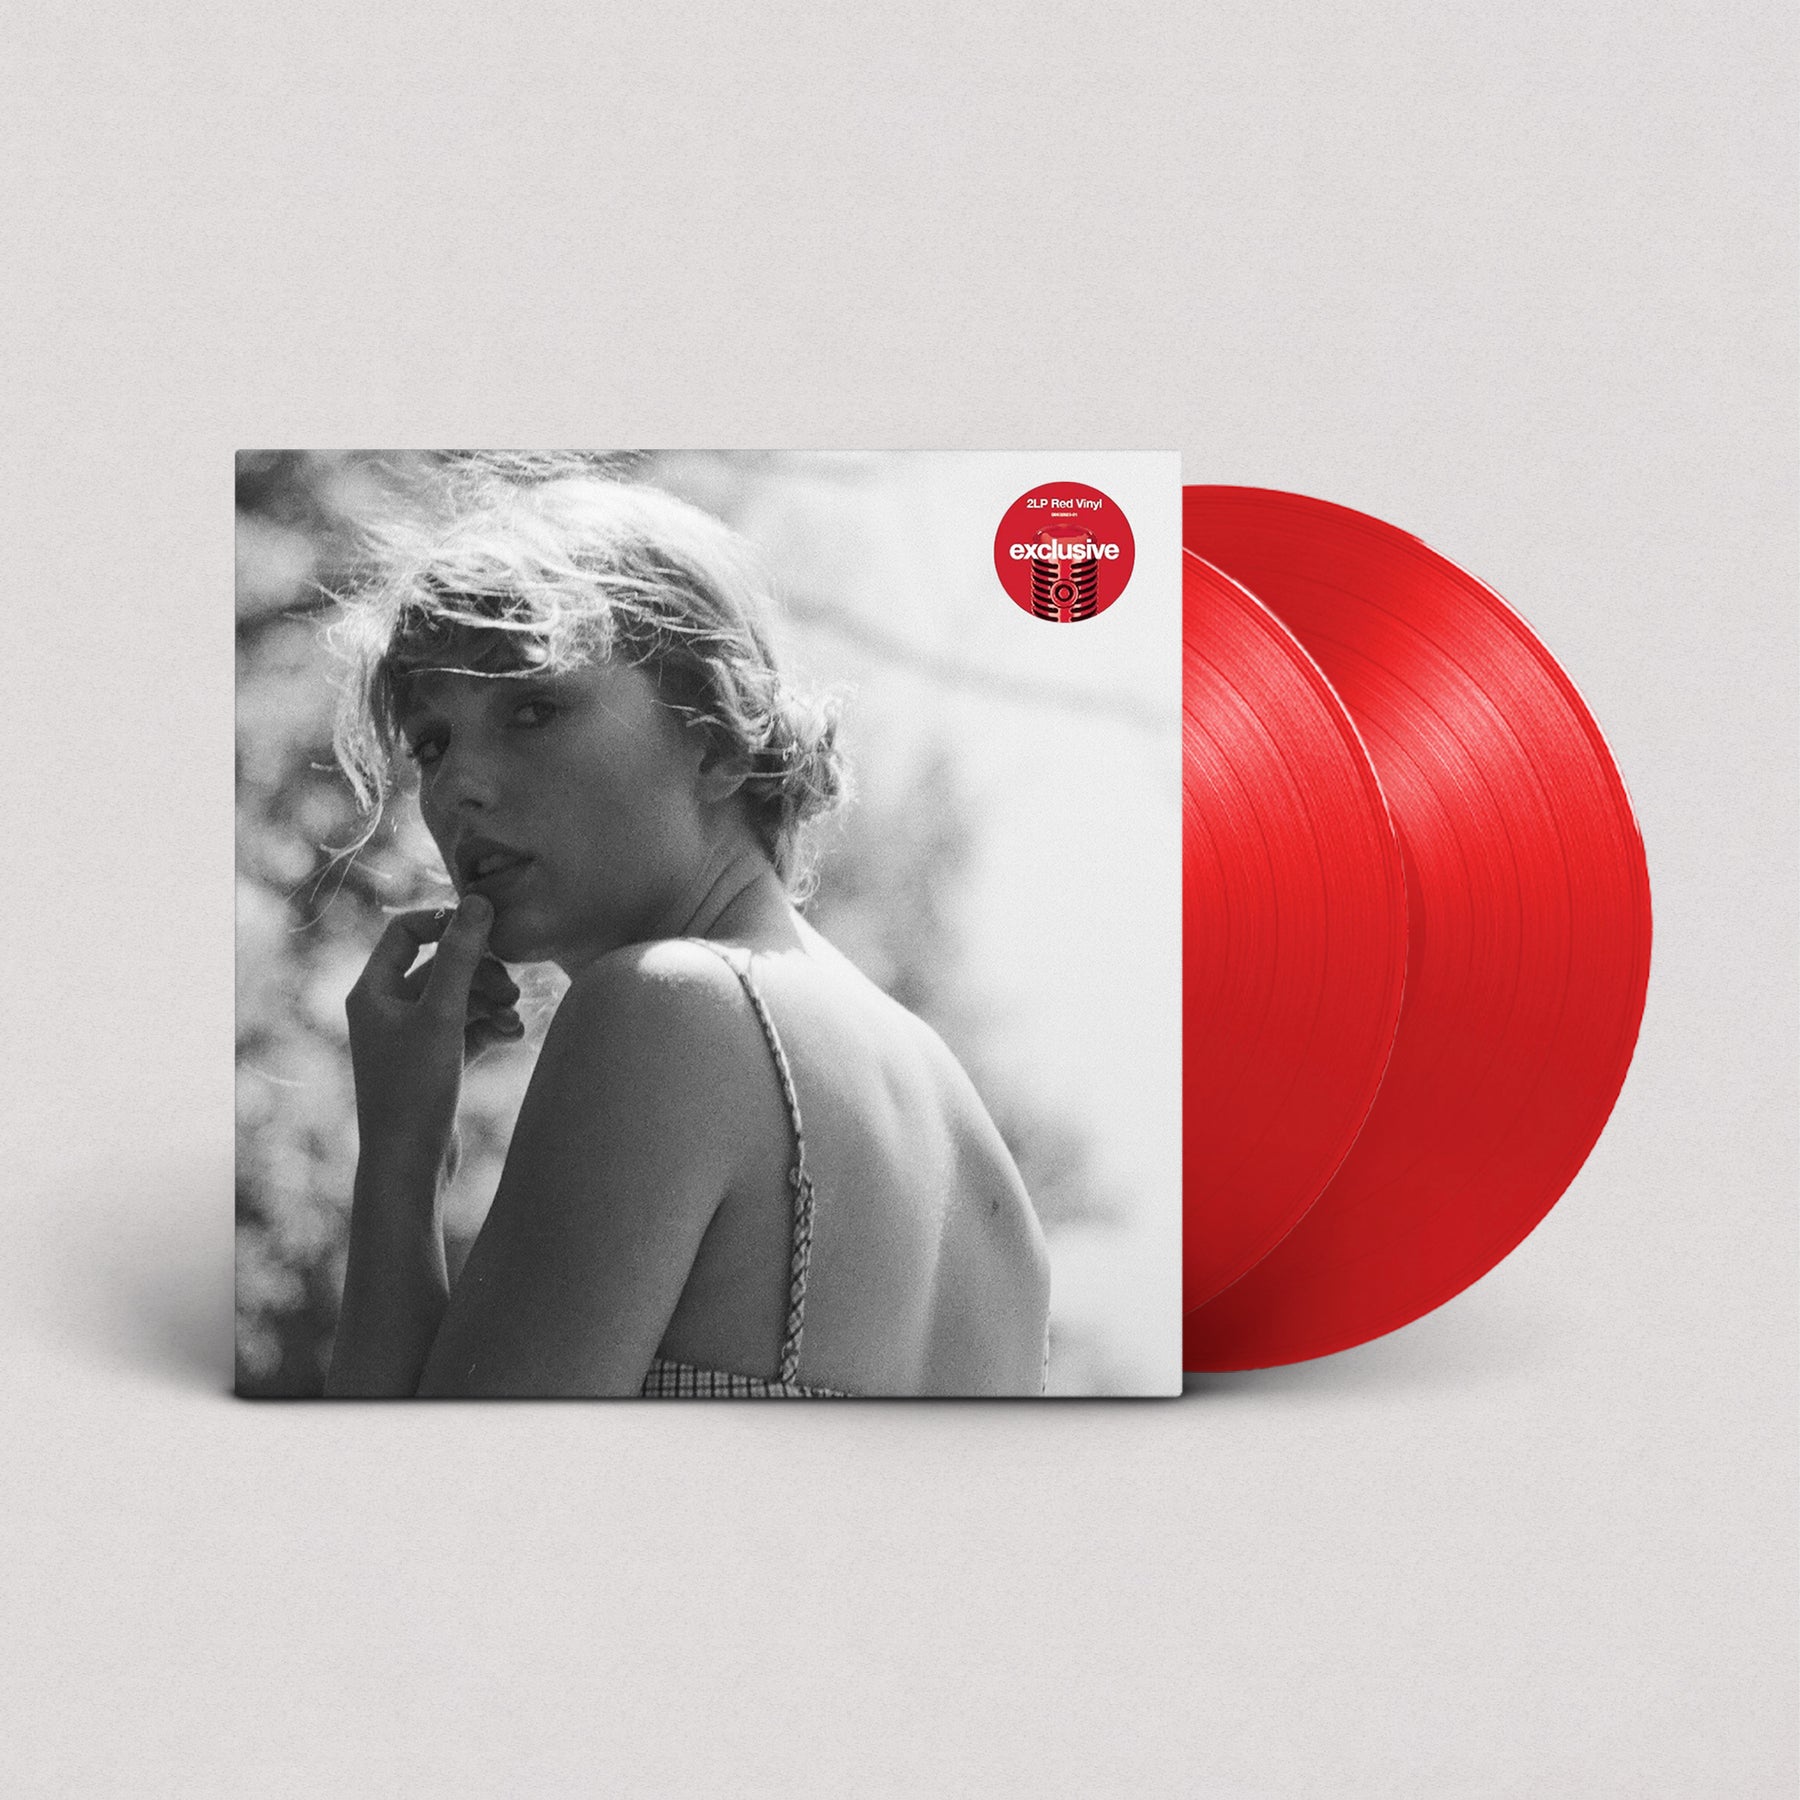 Taylor Swift - Folklore (Target Exclusive, Vinilo 2'LP)